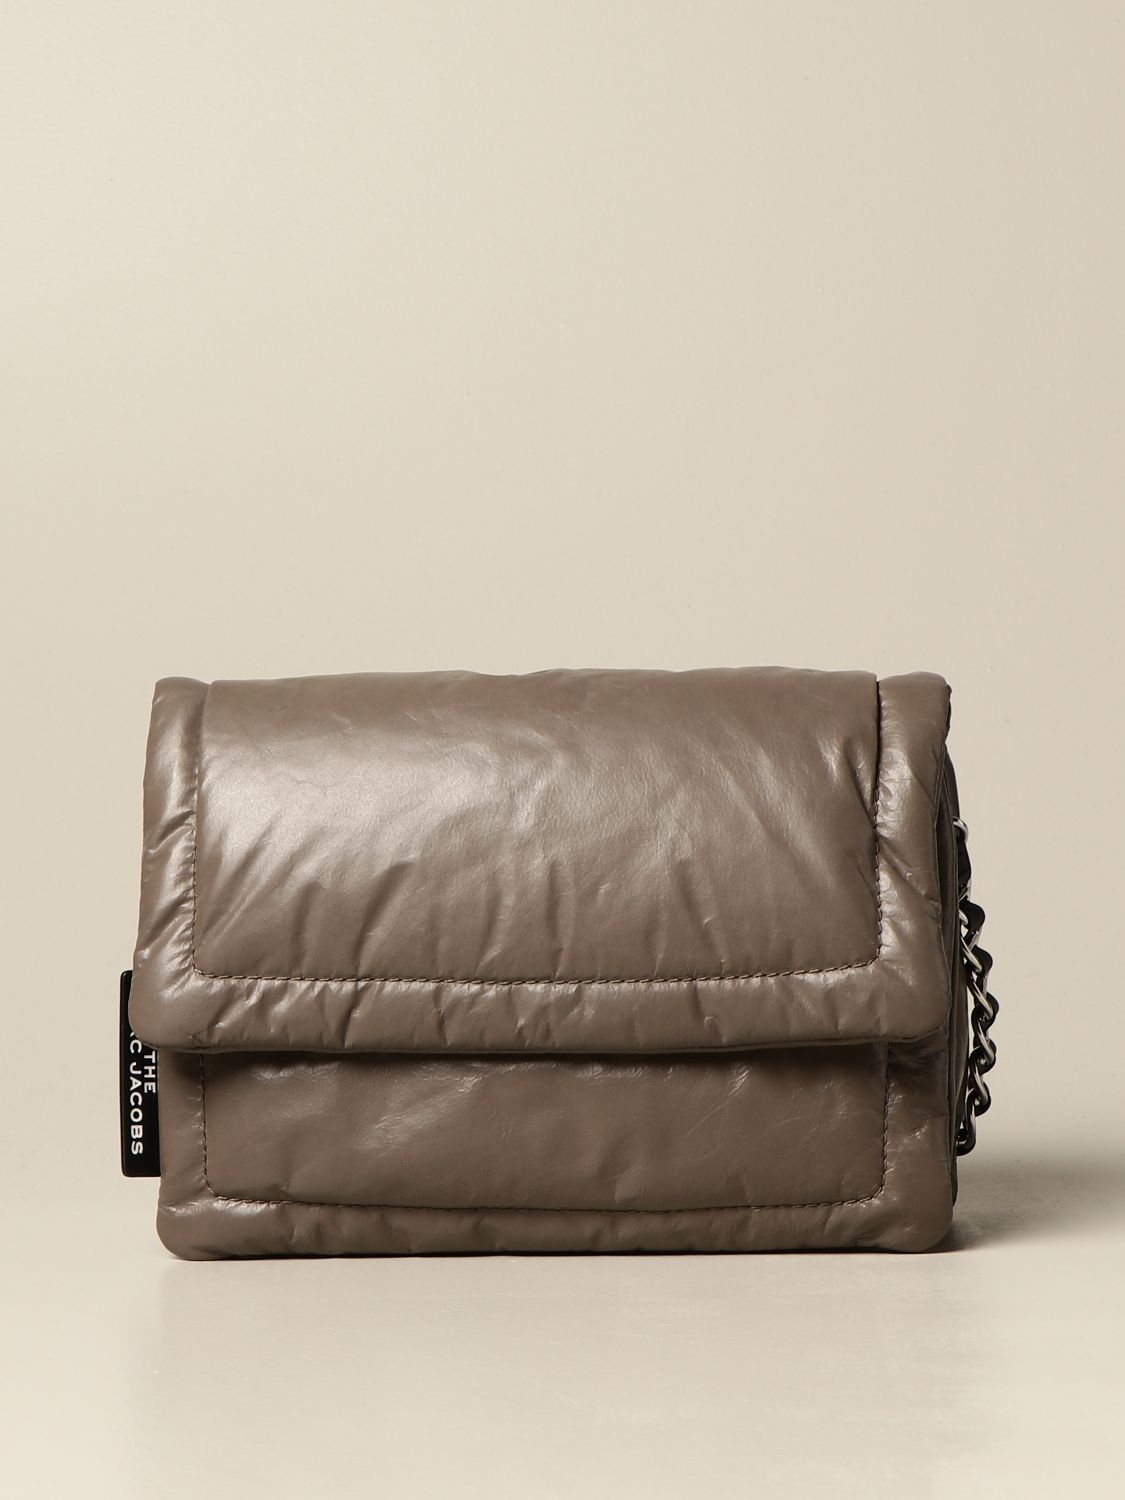 Marc Jacobs - The Pillow Bag